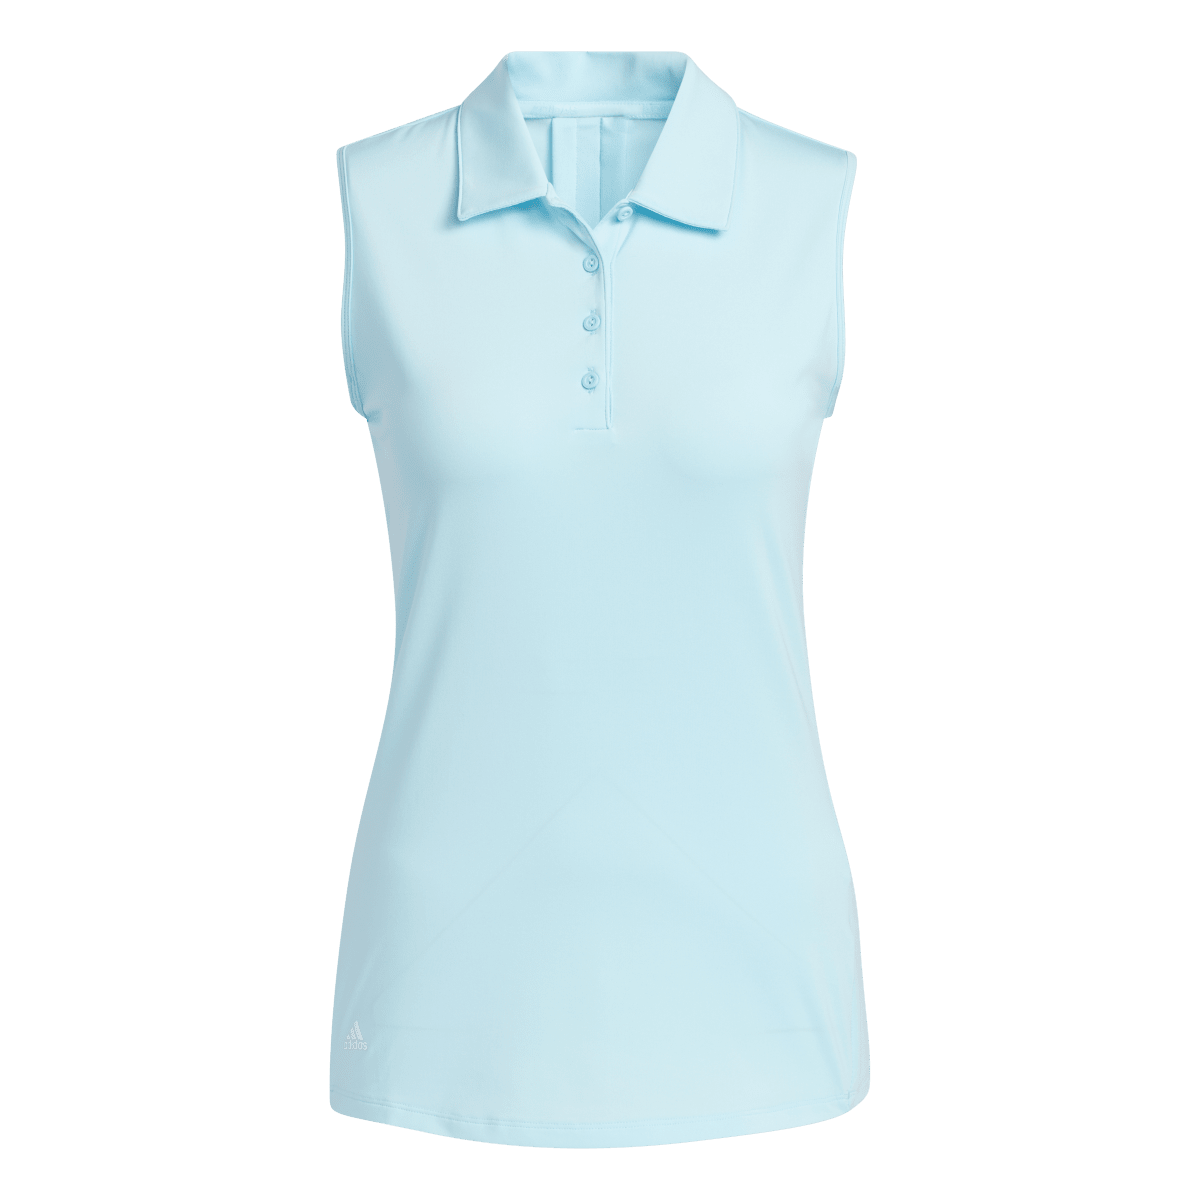 Sleeveless Polo Shirt Denim Clothing, 44% OFF